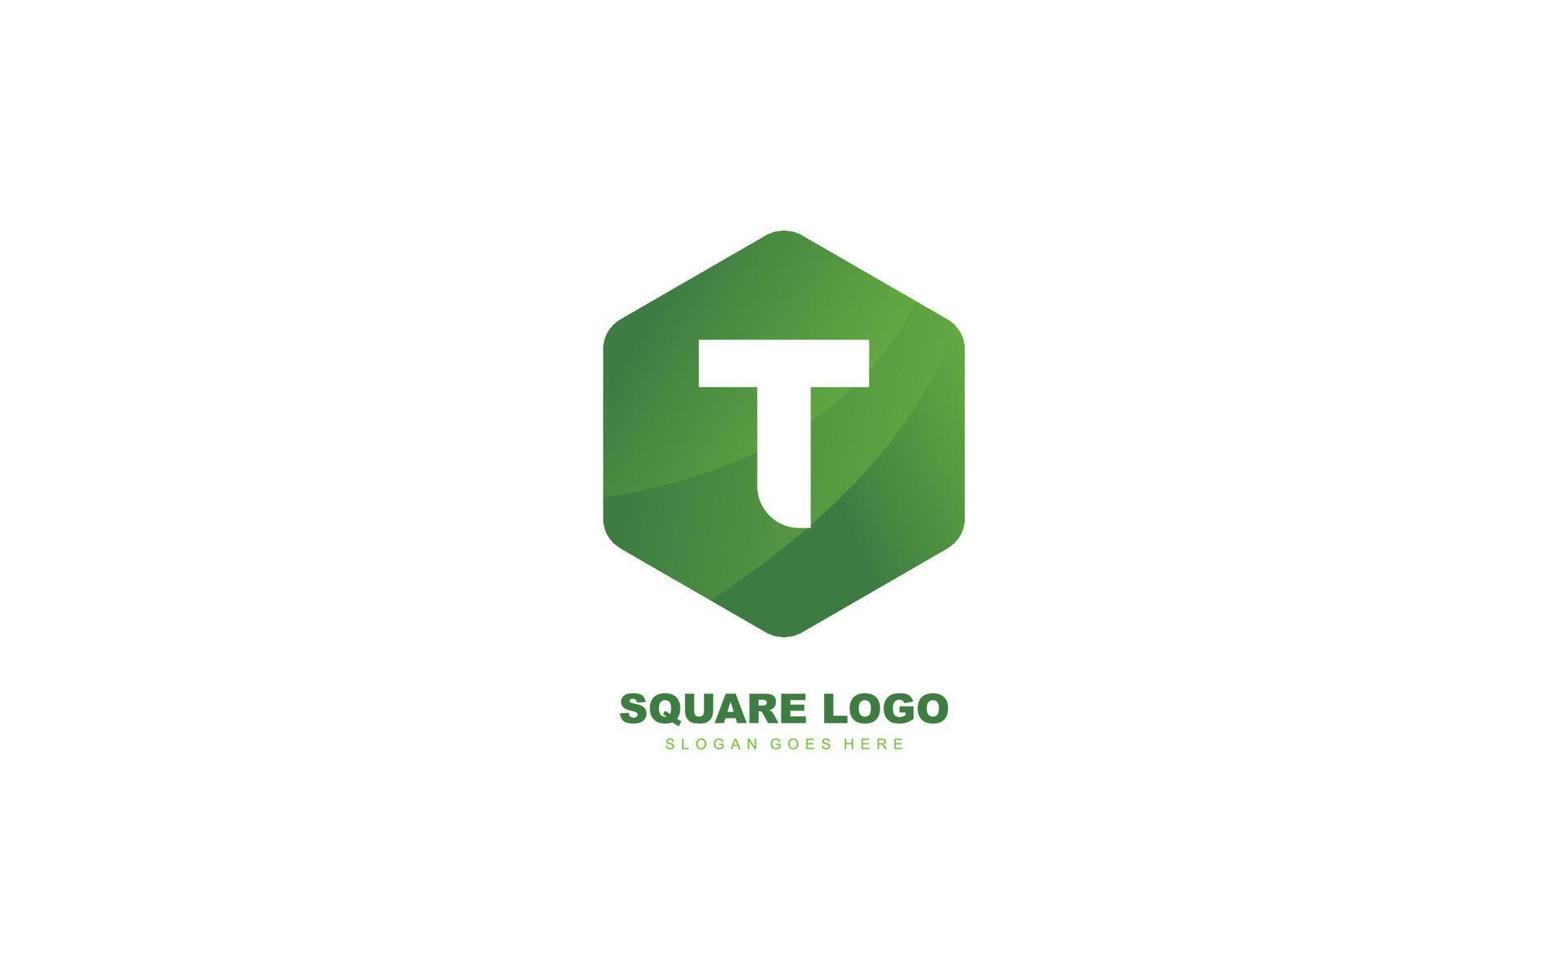 T logo shape for identity. letter template vector illustration for your brand.